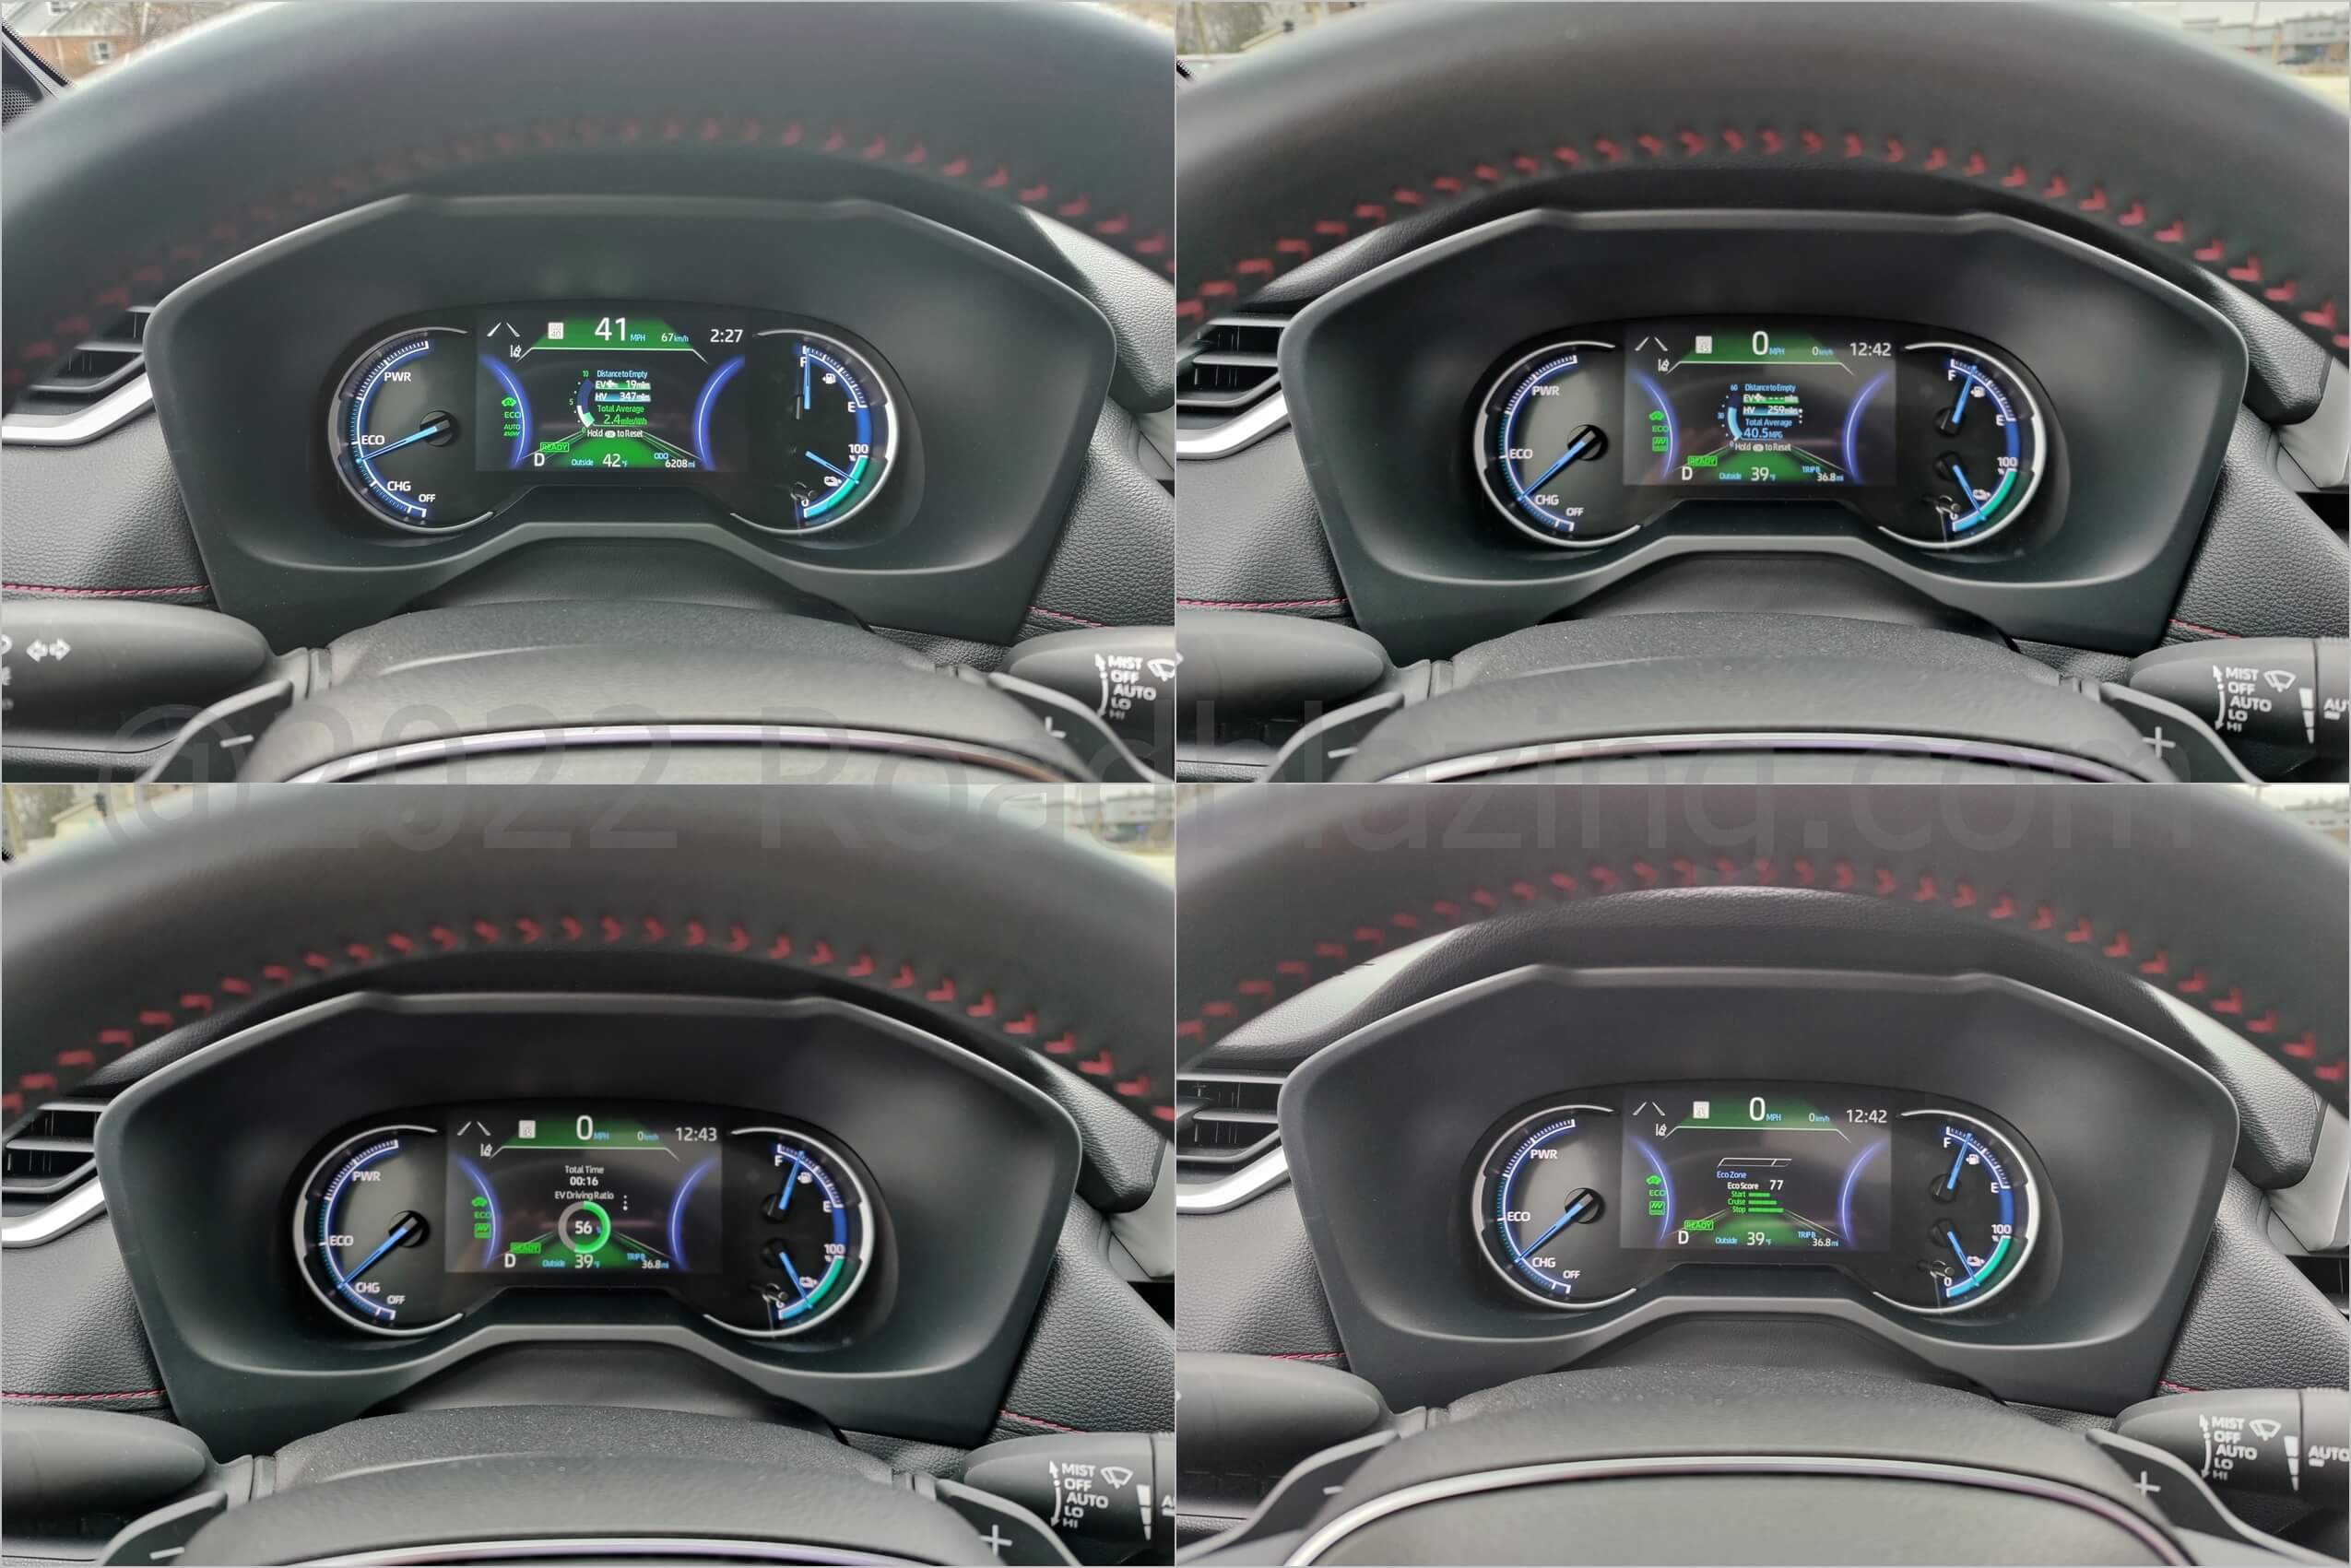 2022 Toyota RAV4 Prime XLE AWD PHEV: gauge cluster battery range and energy consumption displays